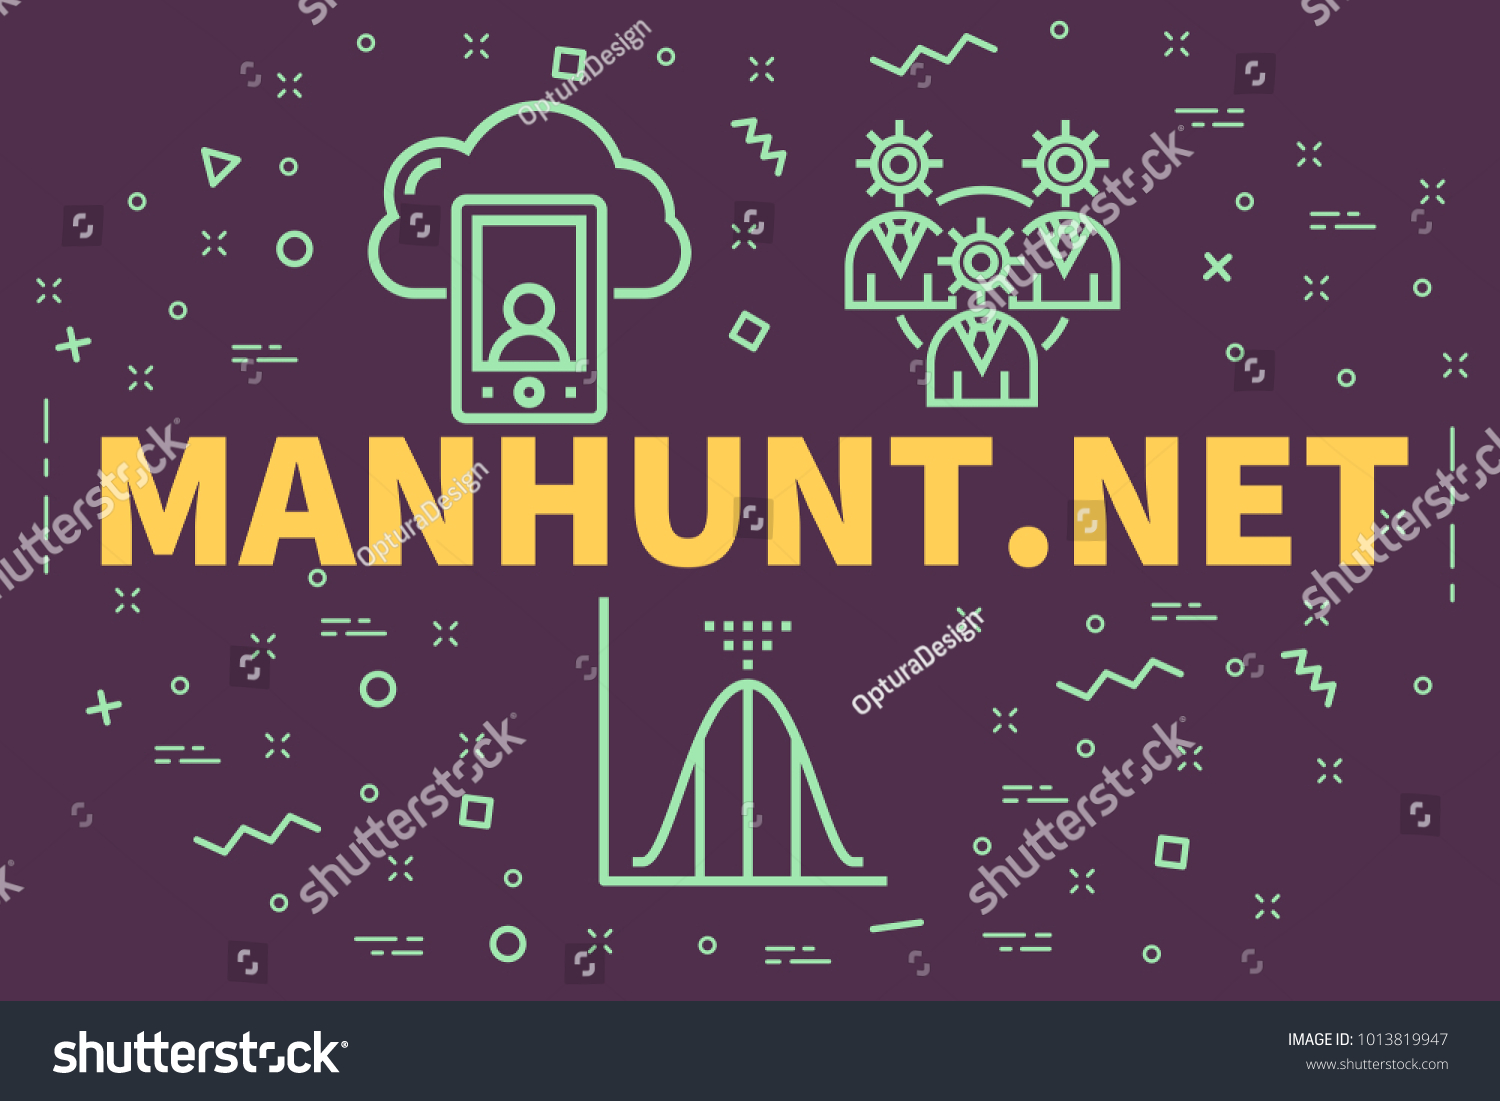 Manhunt Net Contact